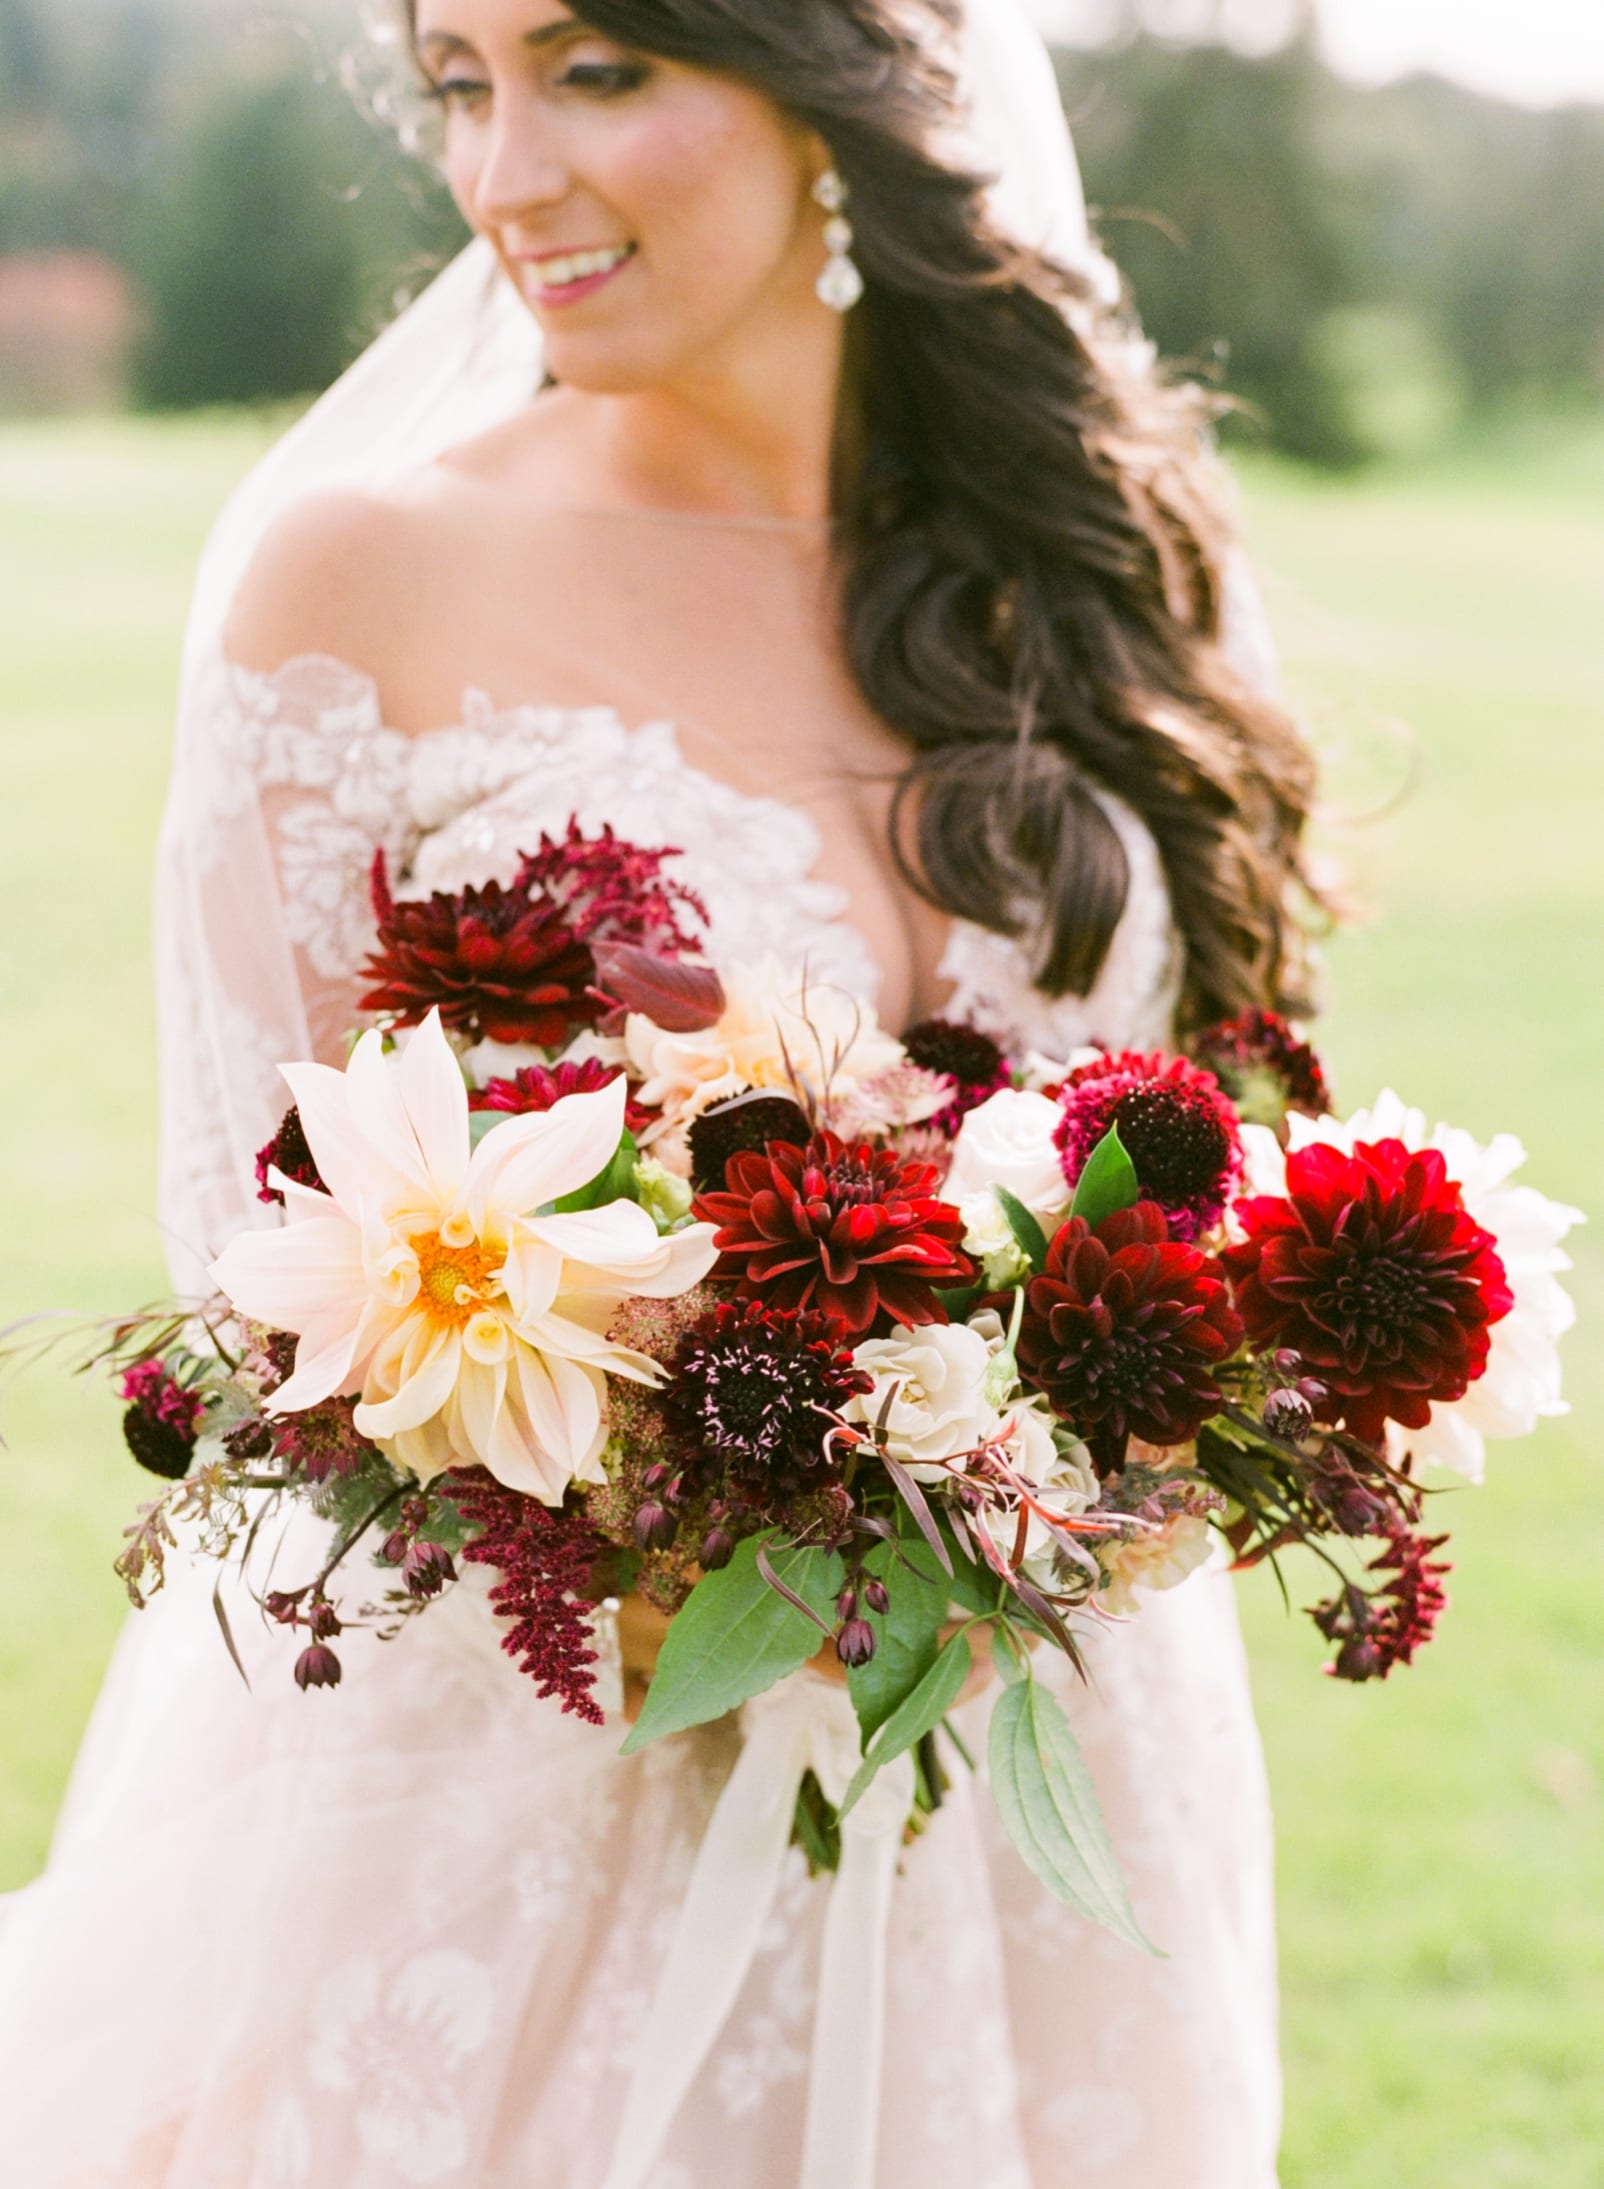 Flourish Flower Farm bridal bouquet with maroon accent flowers photo